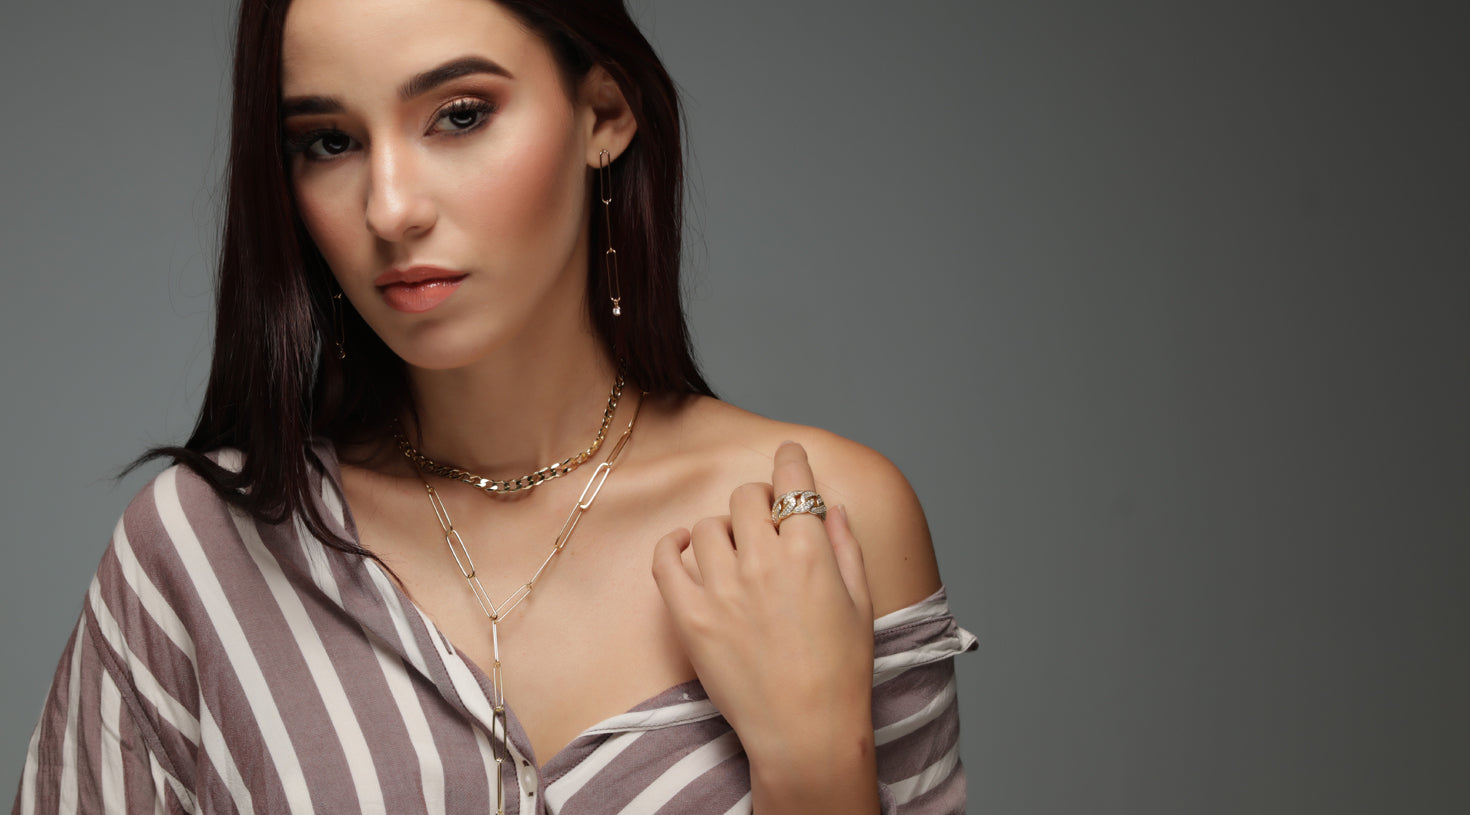 Designer Inspired Clover Necklace - Gold – Balara Jewelry